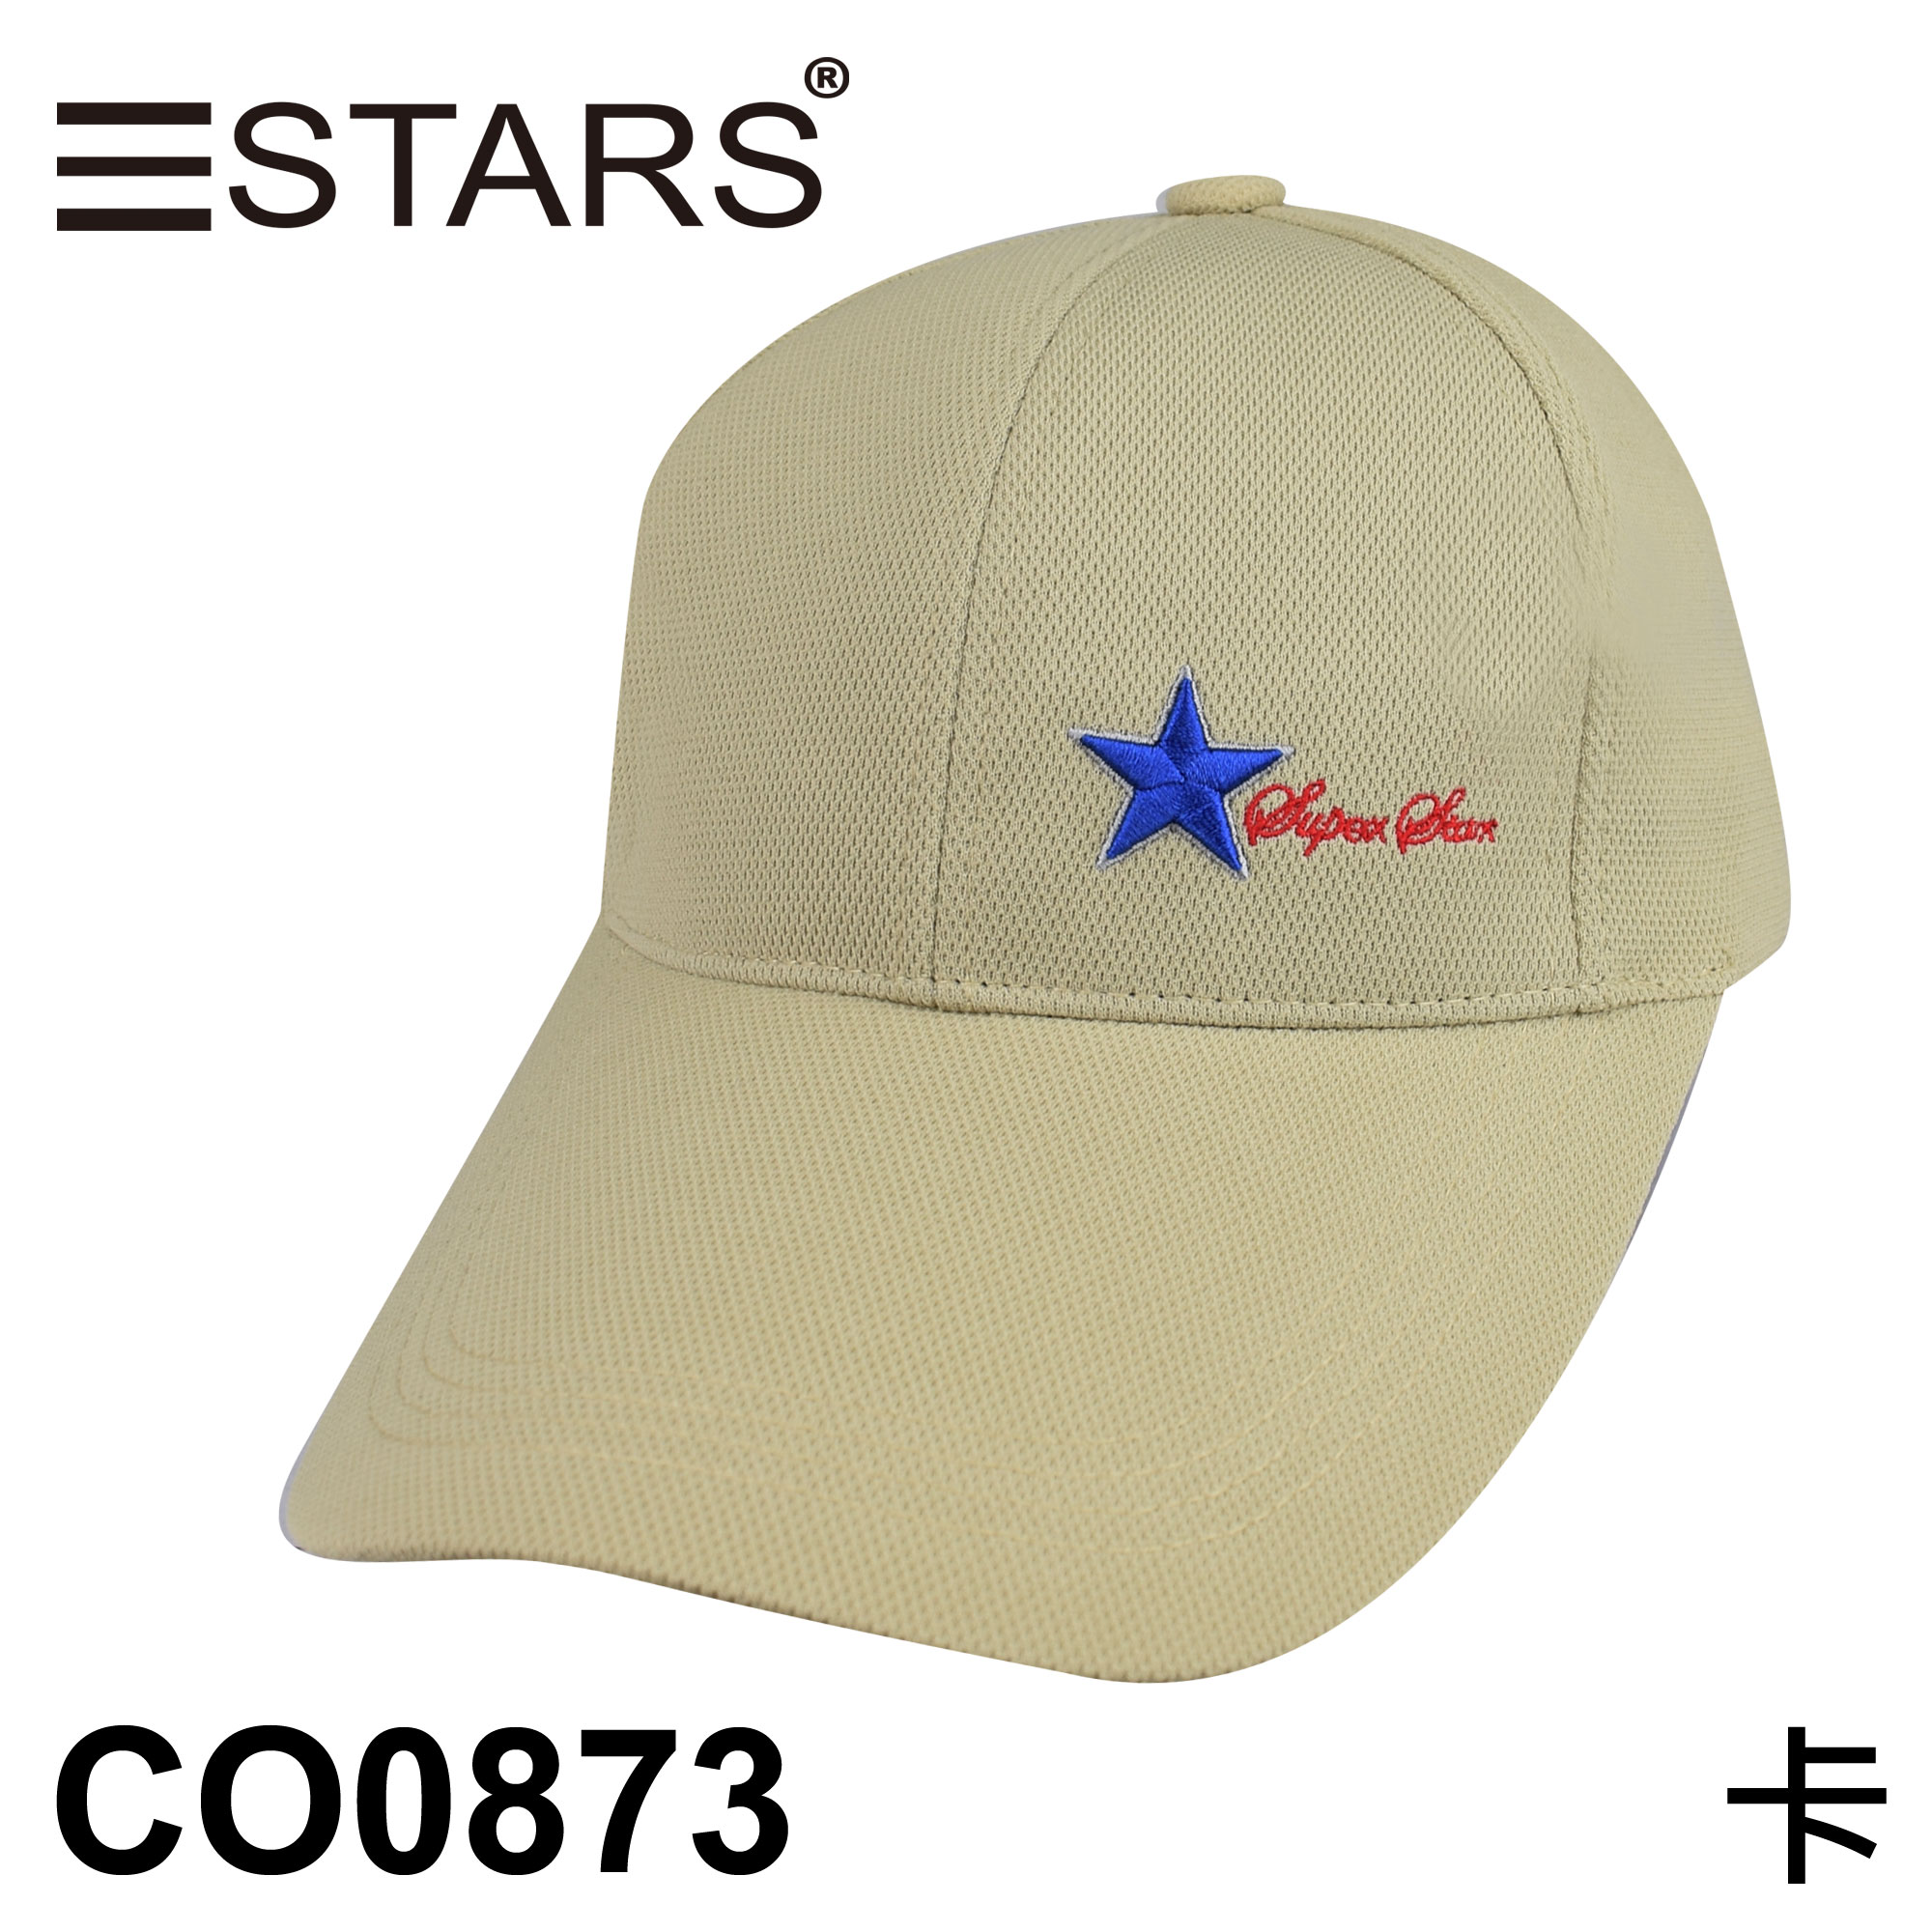 CO0873 素色PK布球帽 SUPER STAR 超級星星 三星製帽